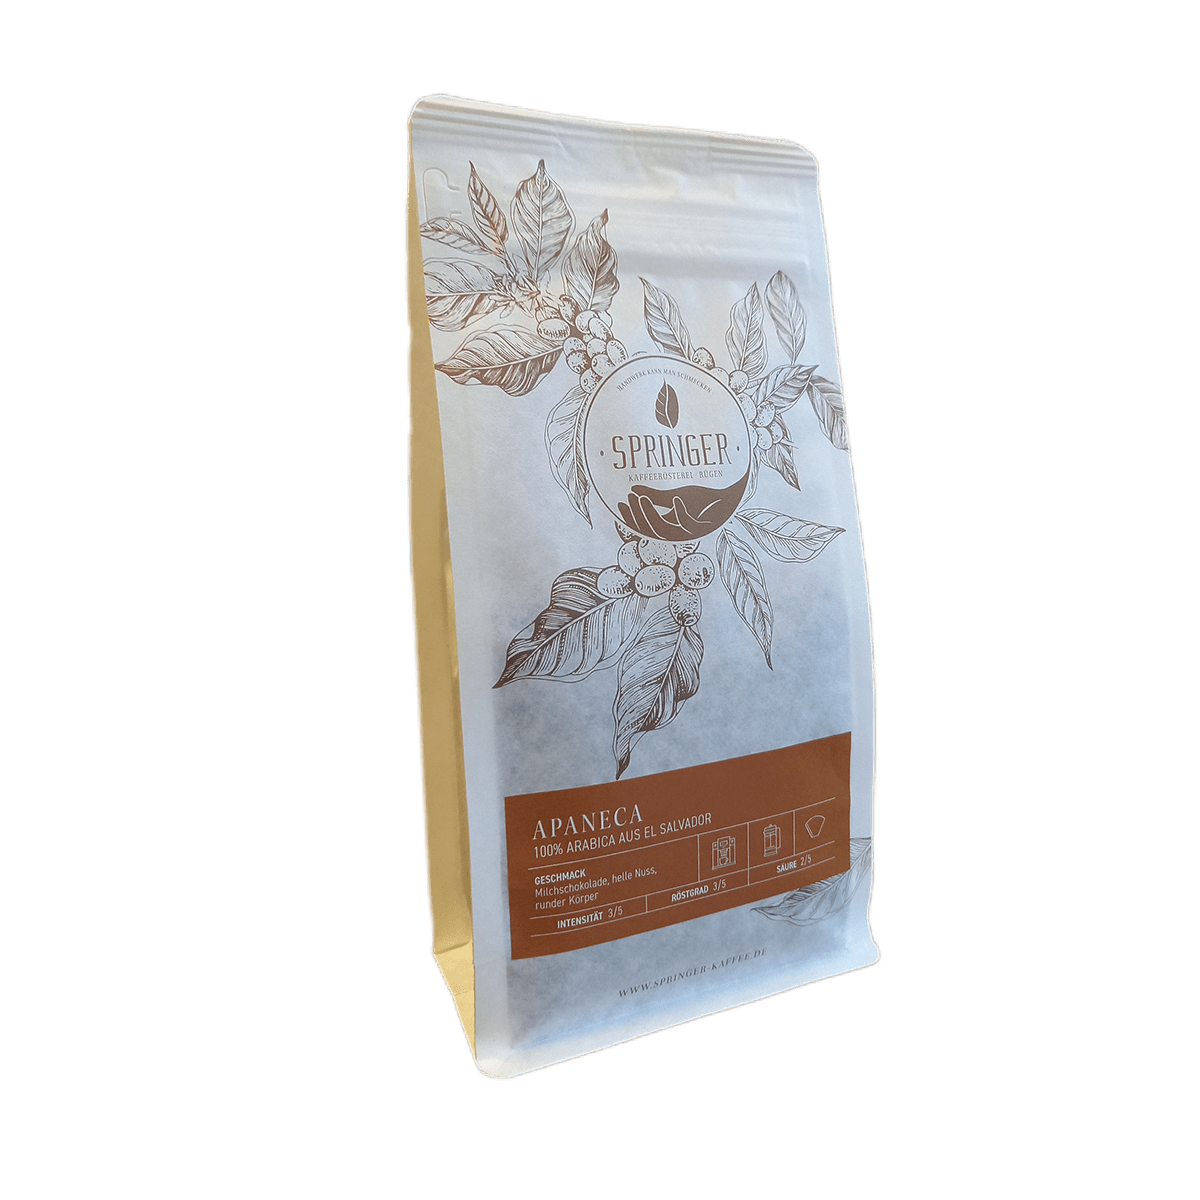 Apaneca – Kaffeesorte aus El Salvador der Springer Kaffeerösterei auf Rügen